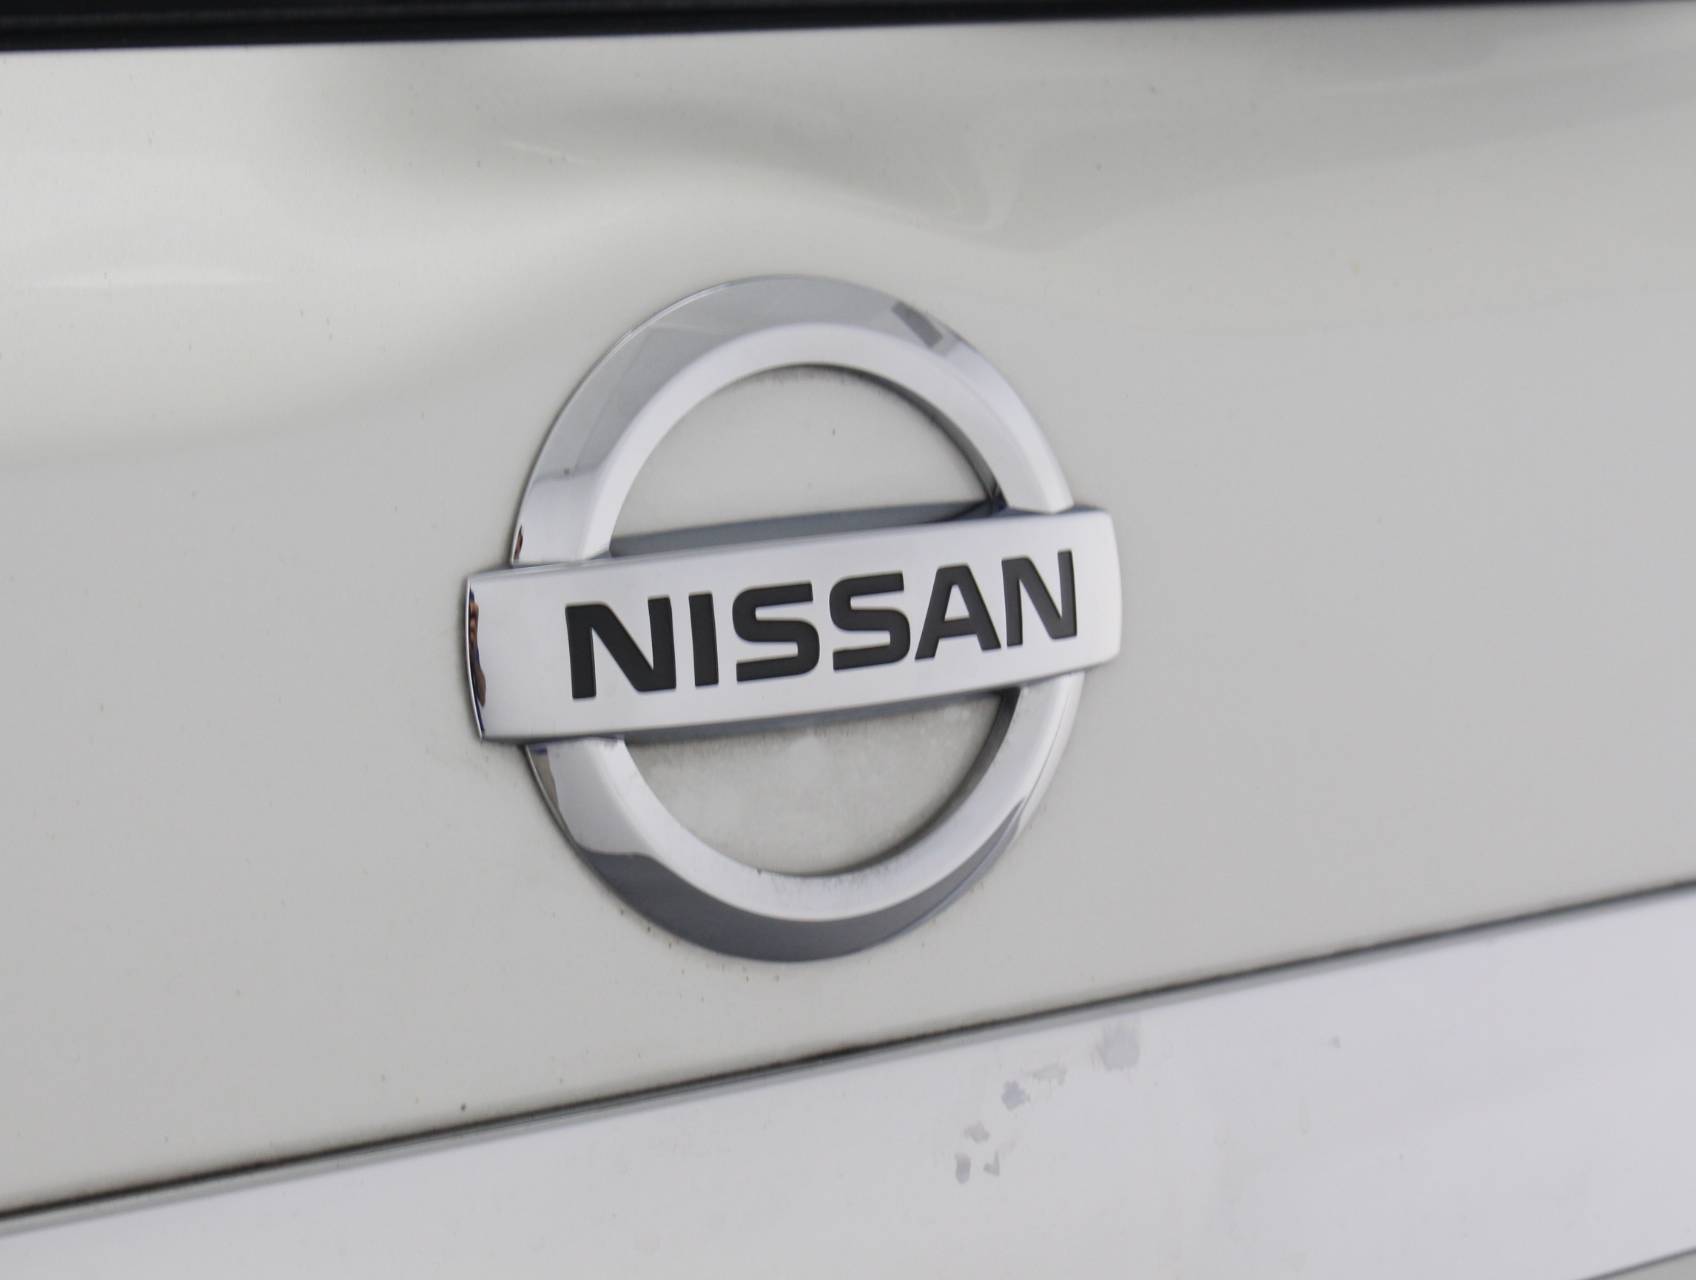 Florida Fine Cars - Used NISSAN PATHFINDER 2015 WEST PALM Sv